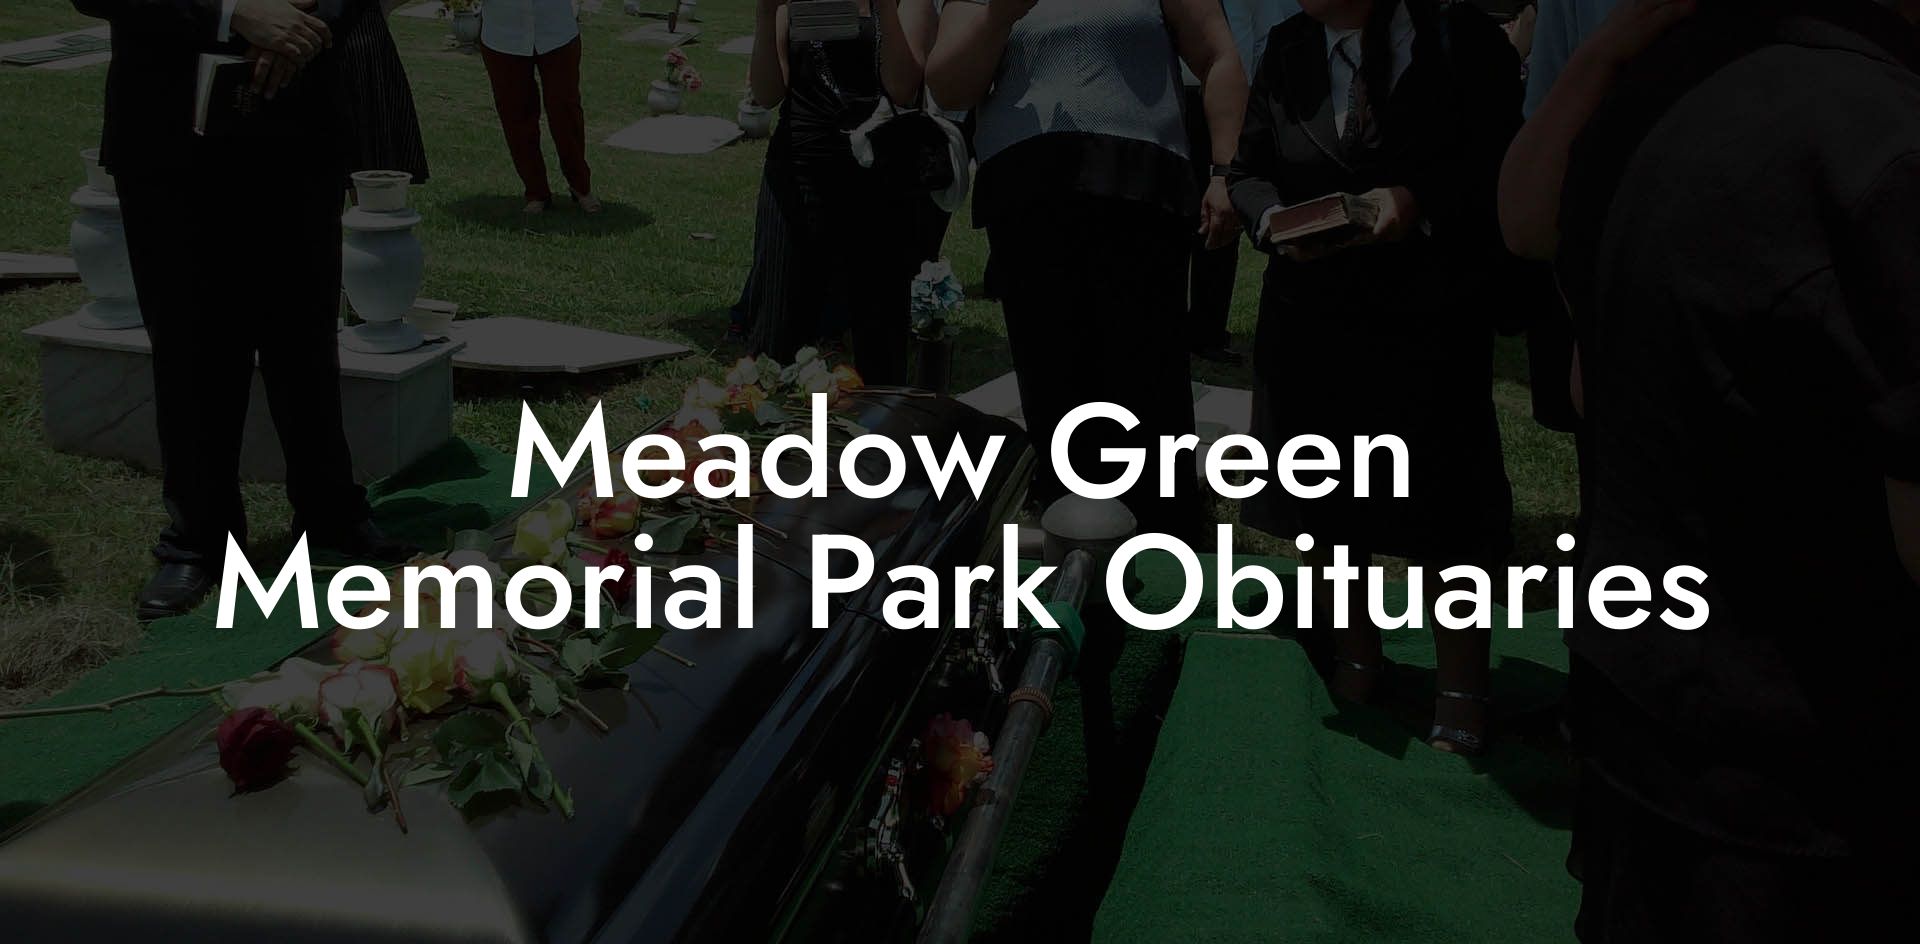 Meadow Green Memorial Park Obituaries